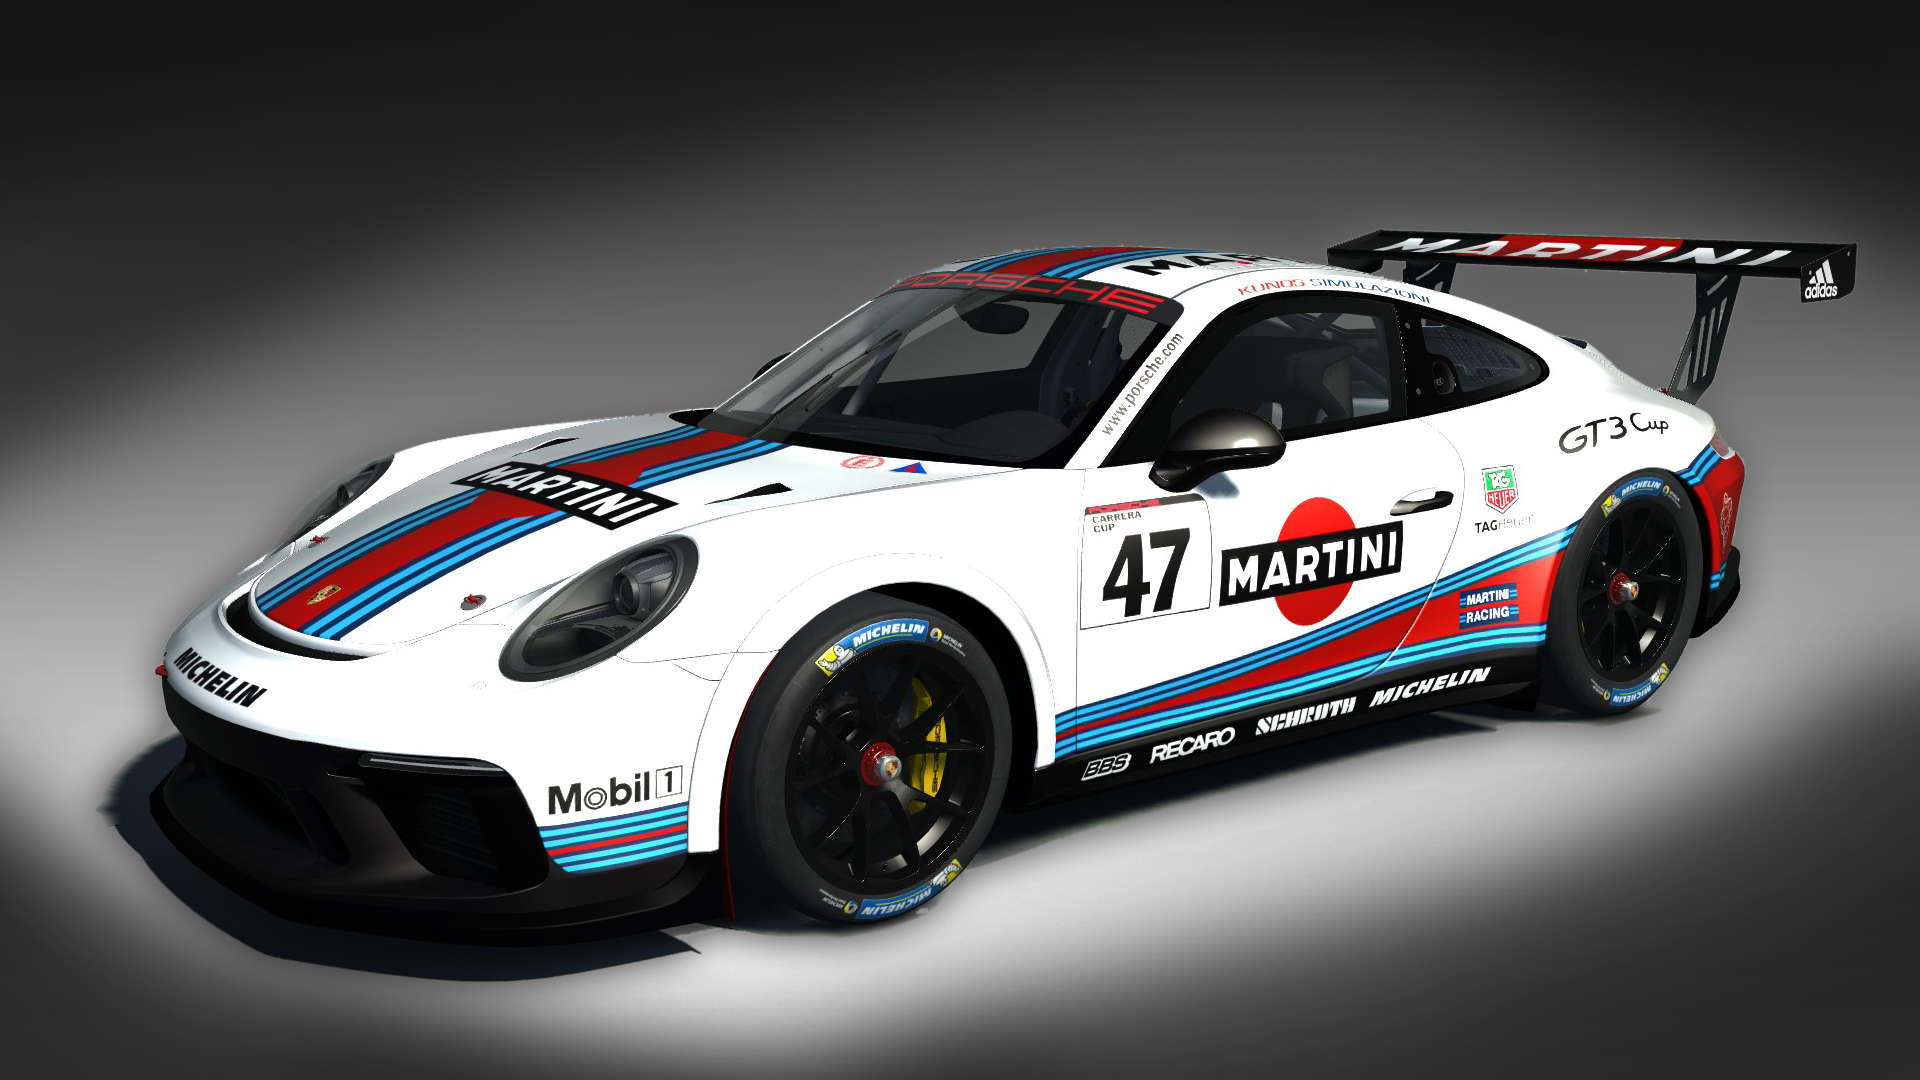 KS_Porsche_911_Cup_2017_Martini_47.jpg